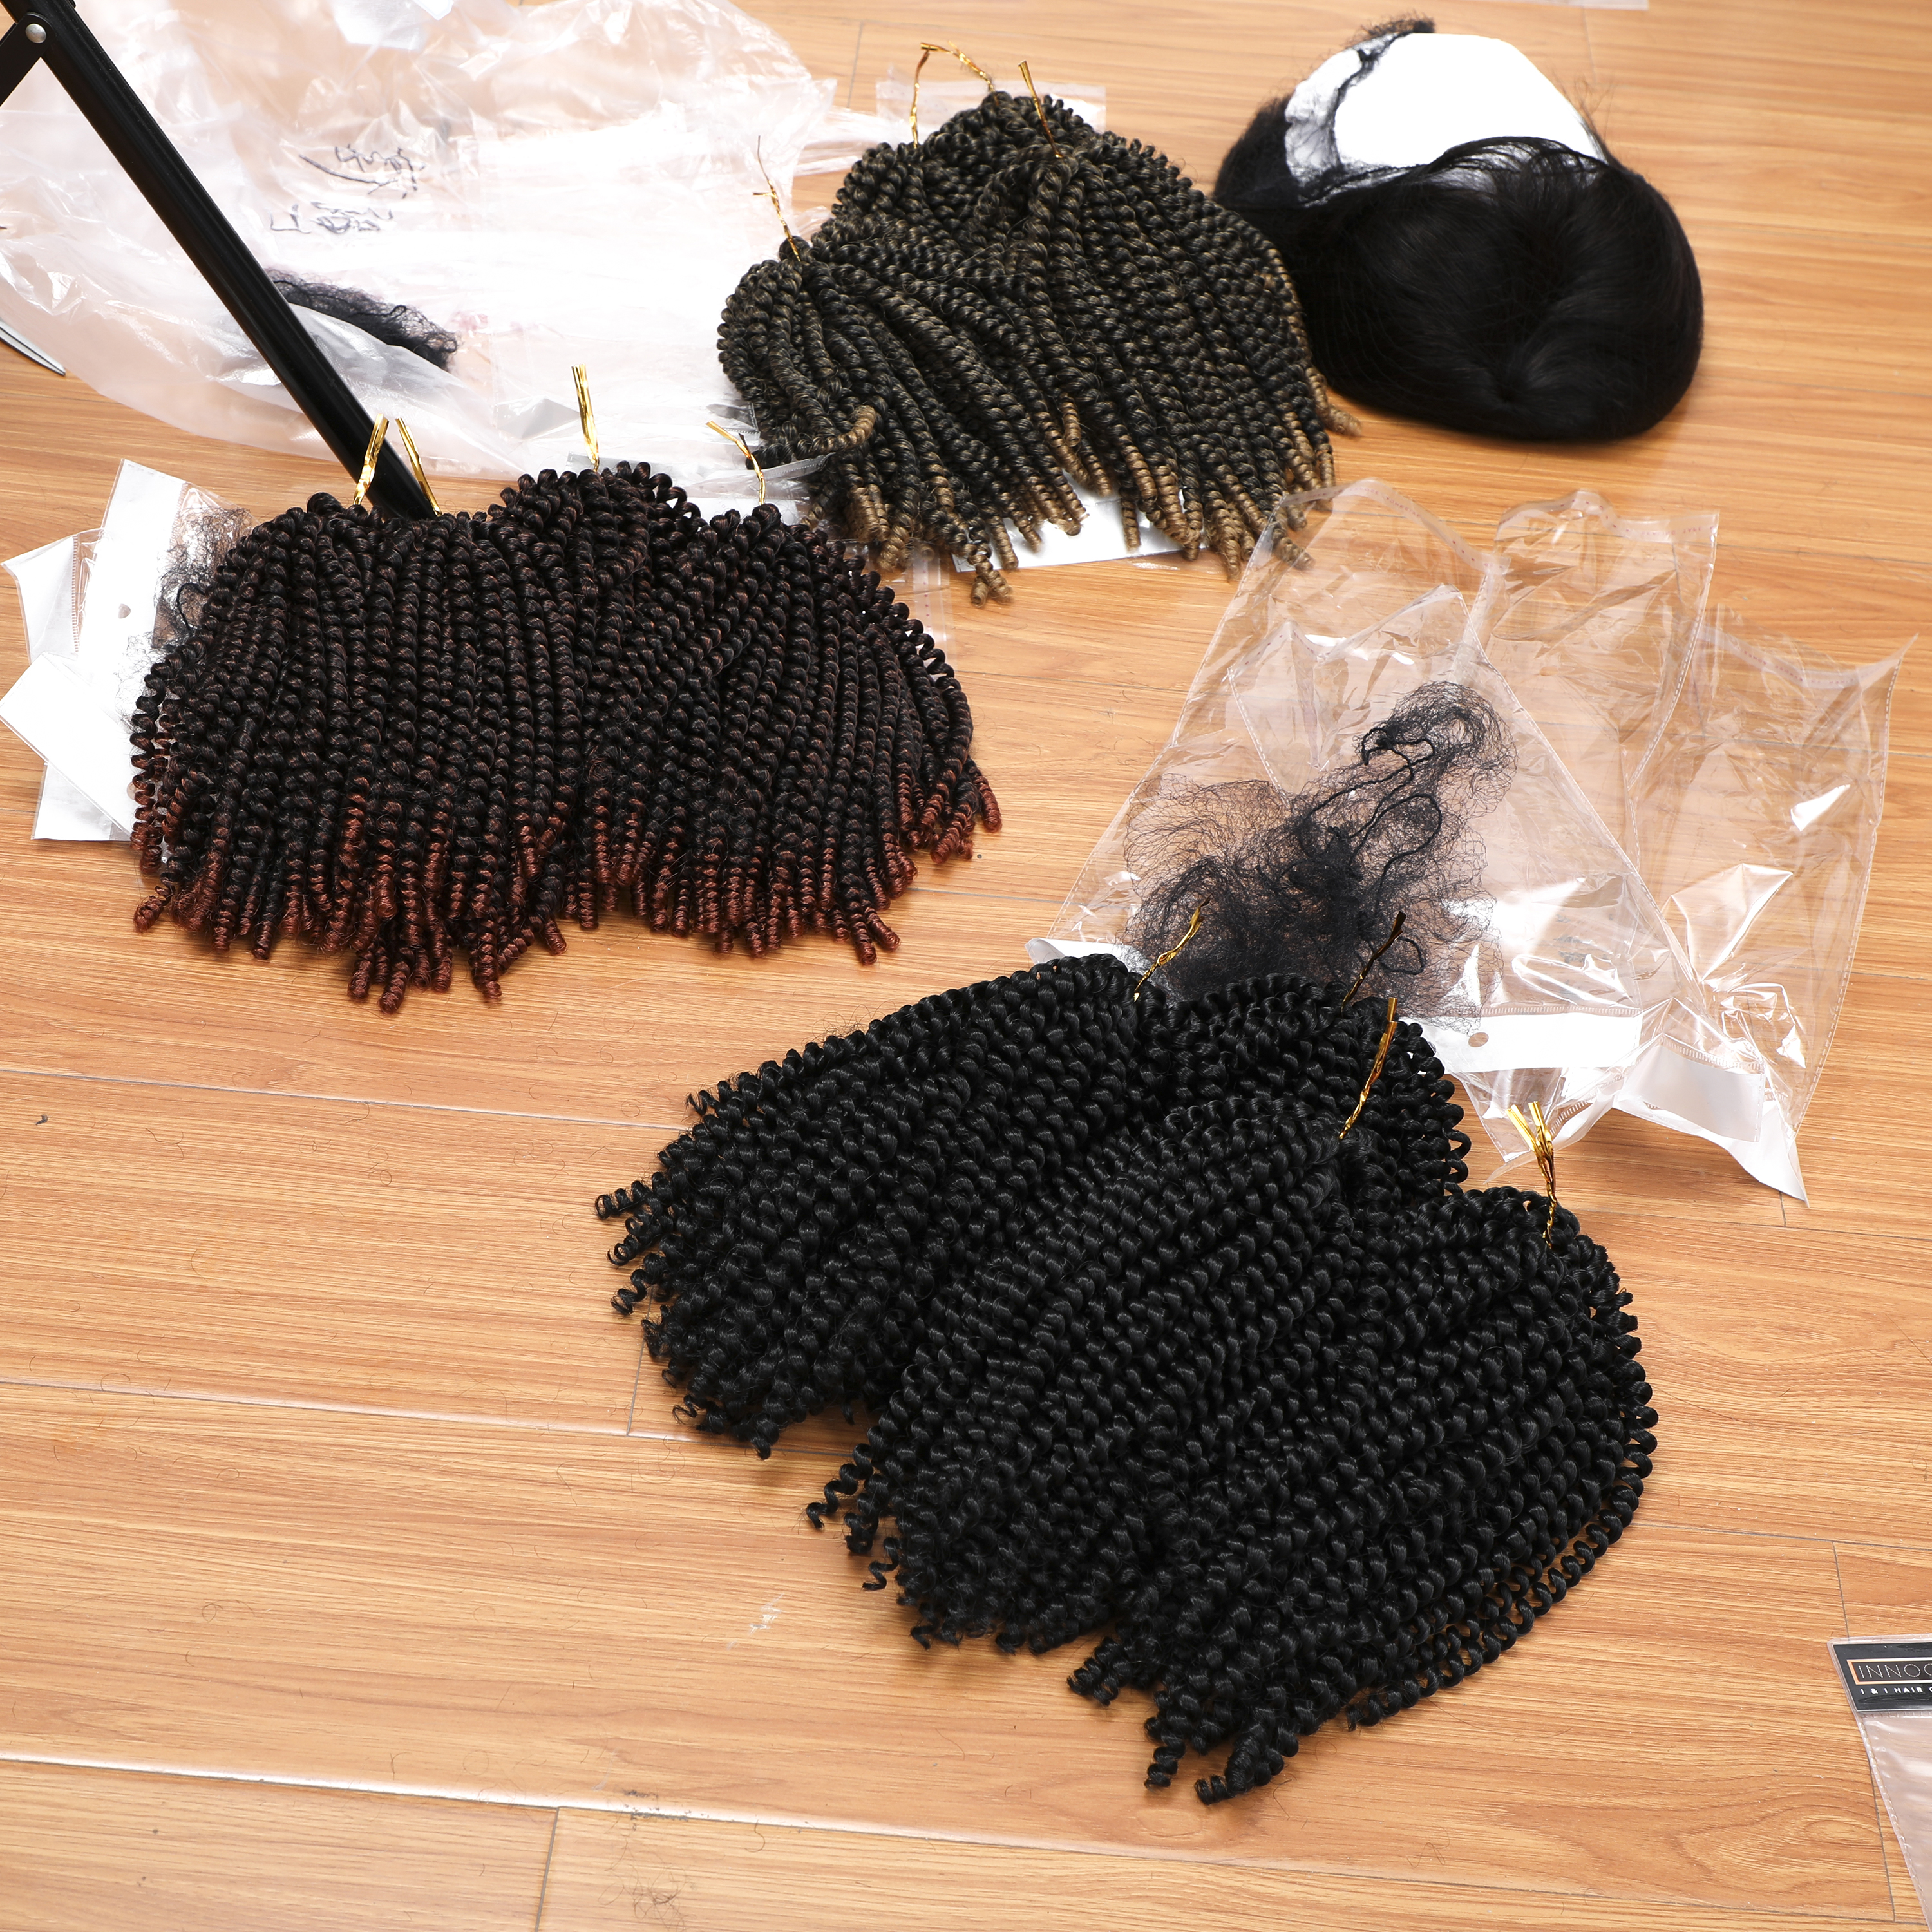 Spring Twist Crochet Braids Hair 6 Packs 8inch - #T30